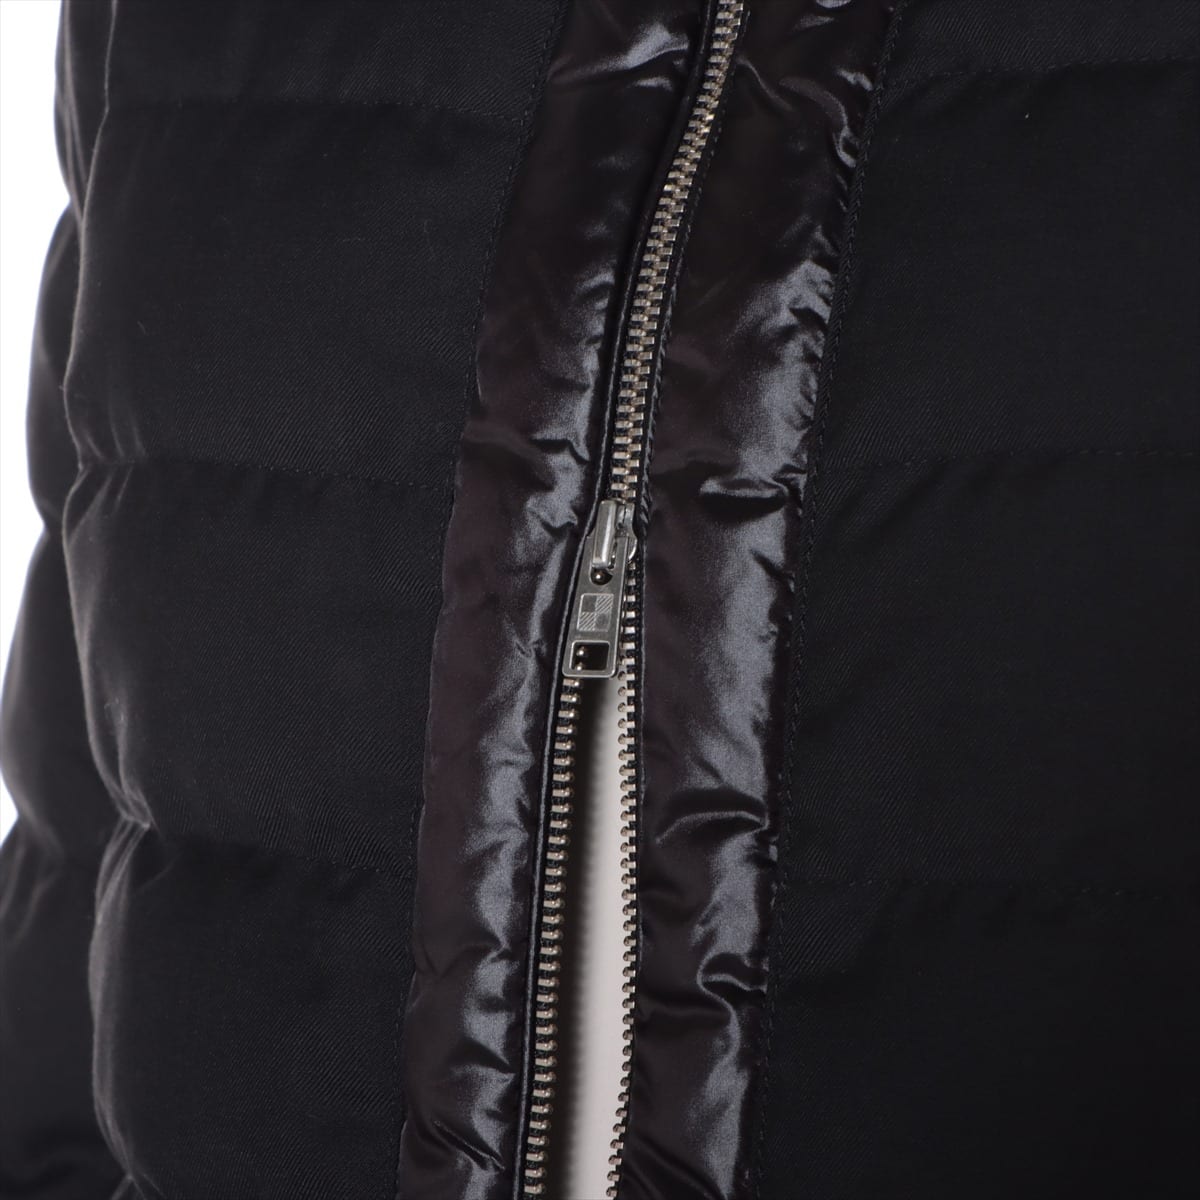 Woolrich Polyester × Rayon Down jacket S Ladies' Black  WWOU0357